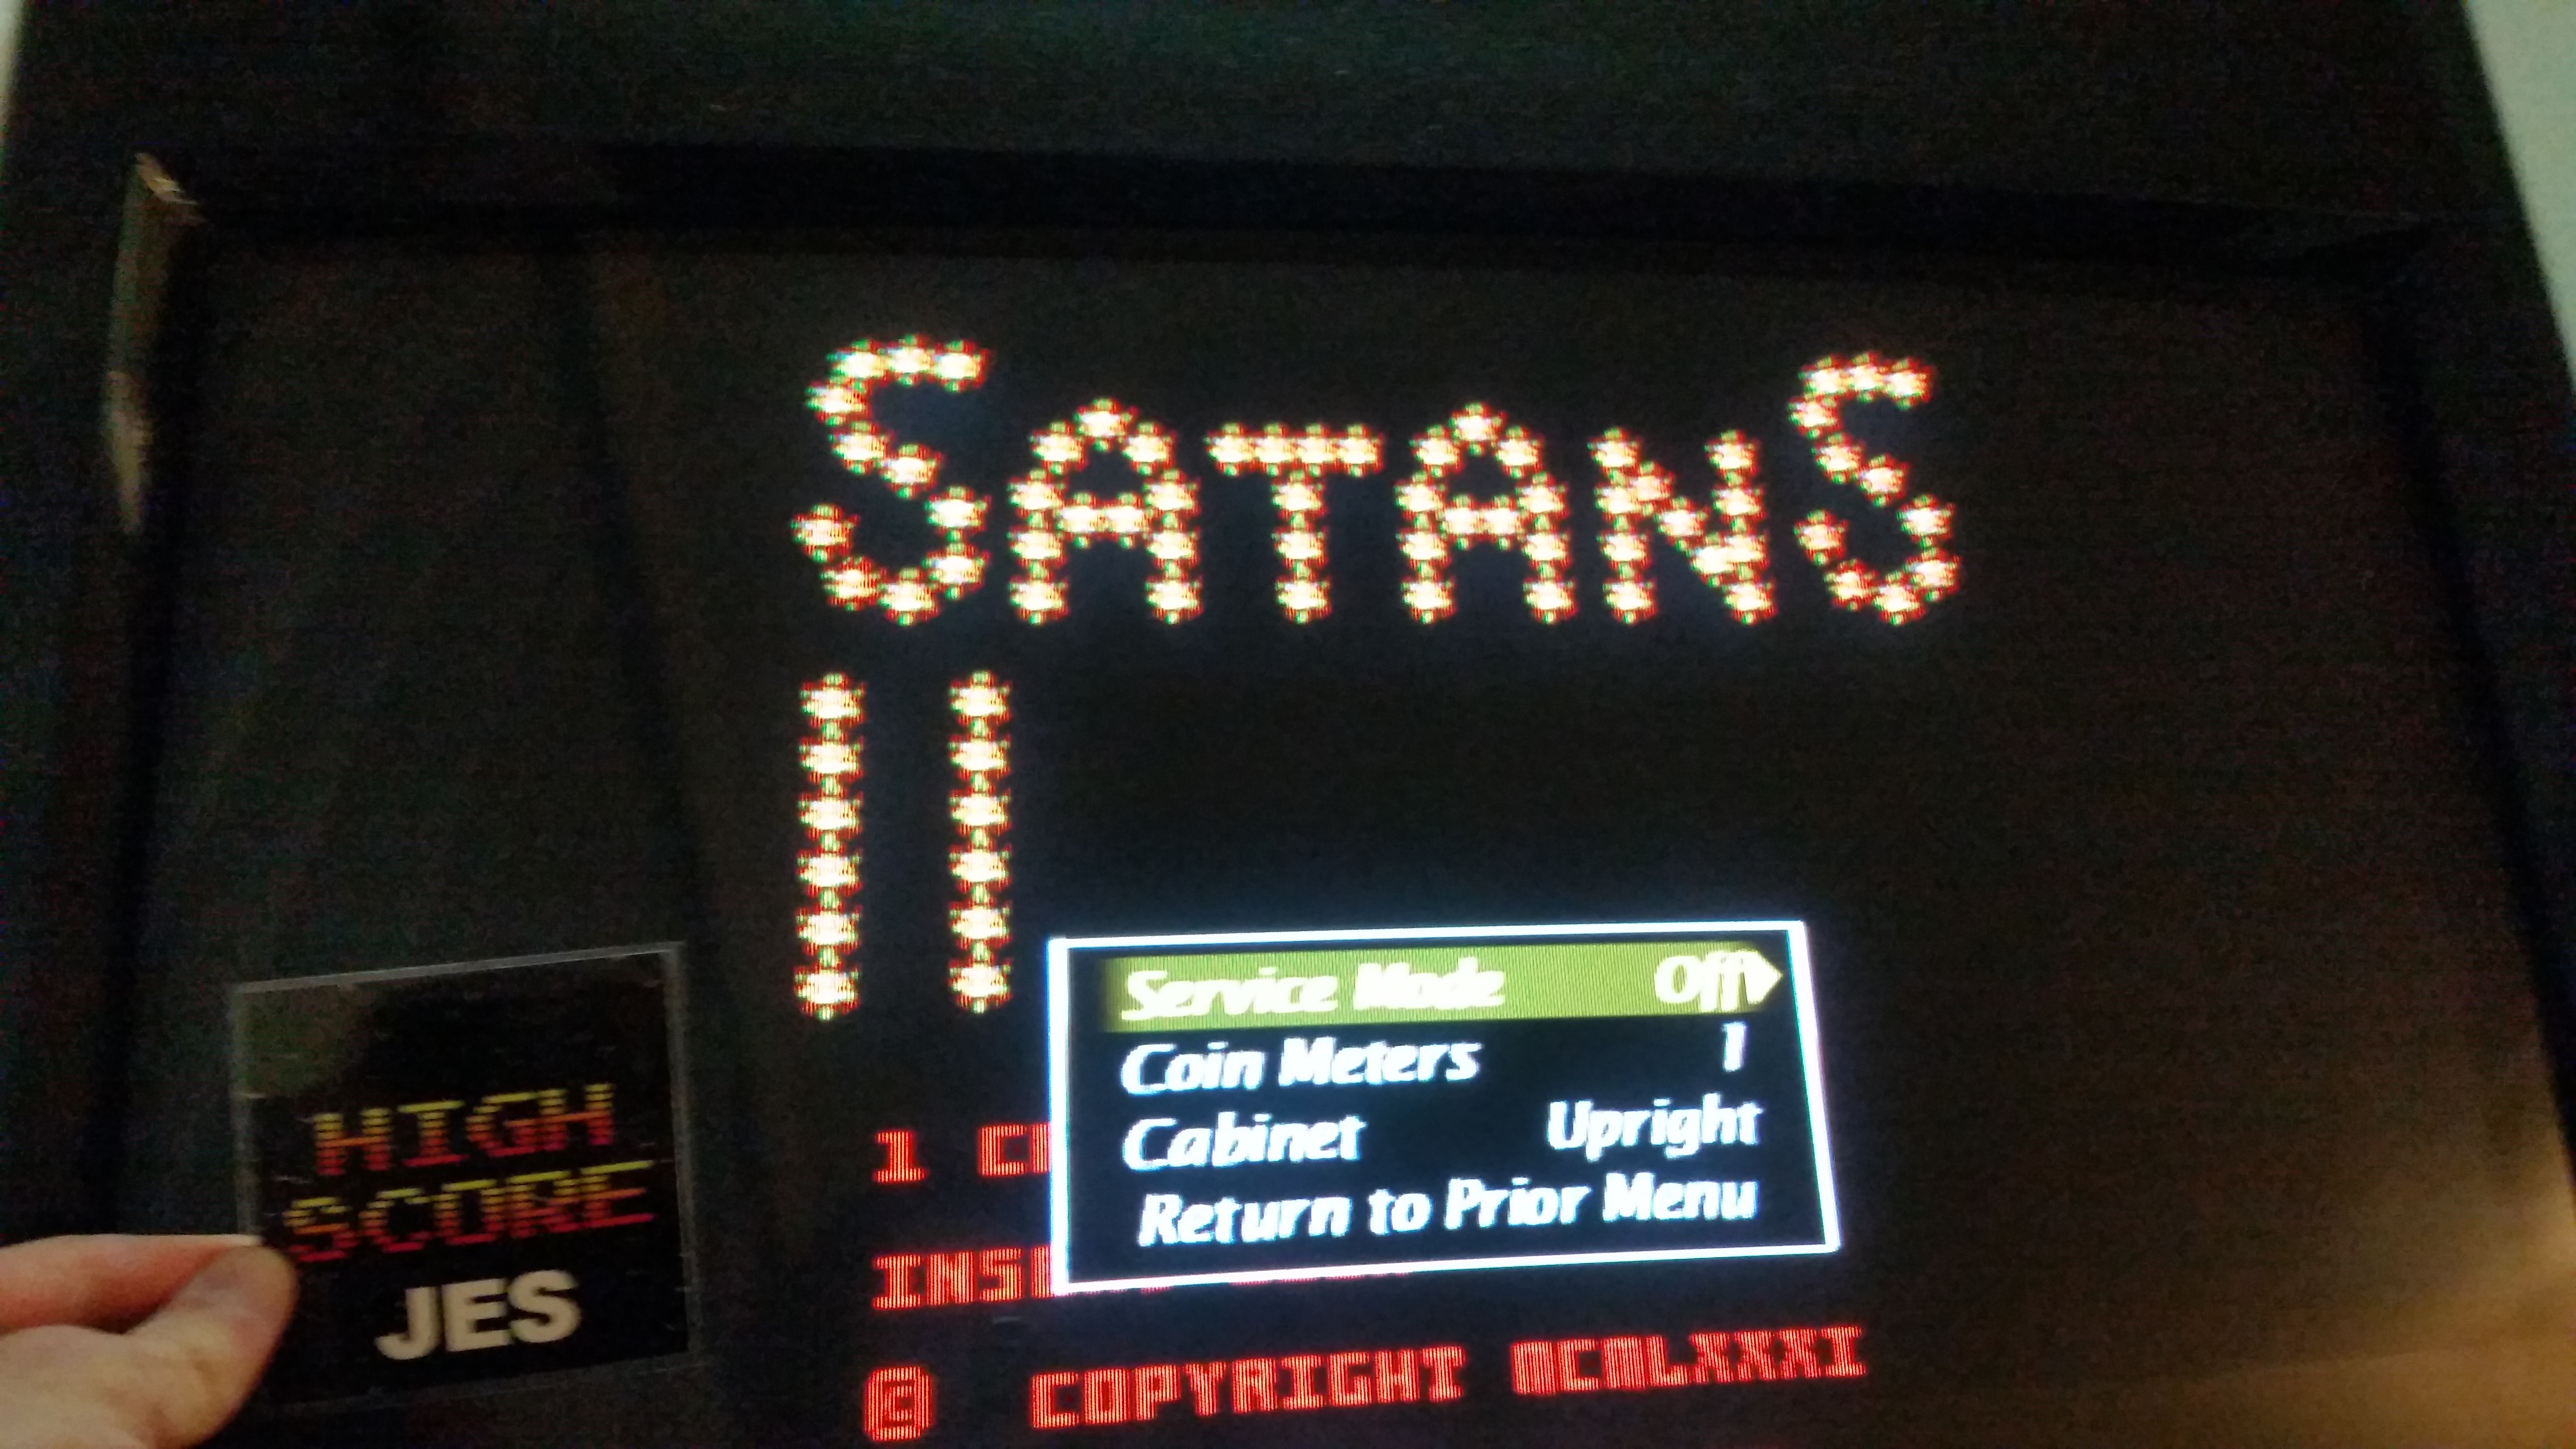 JES: Satan